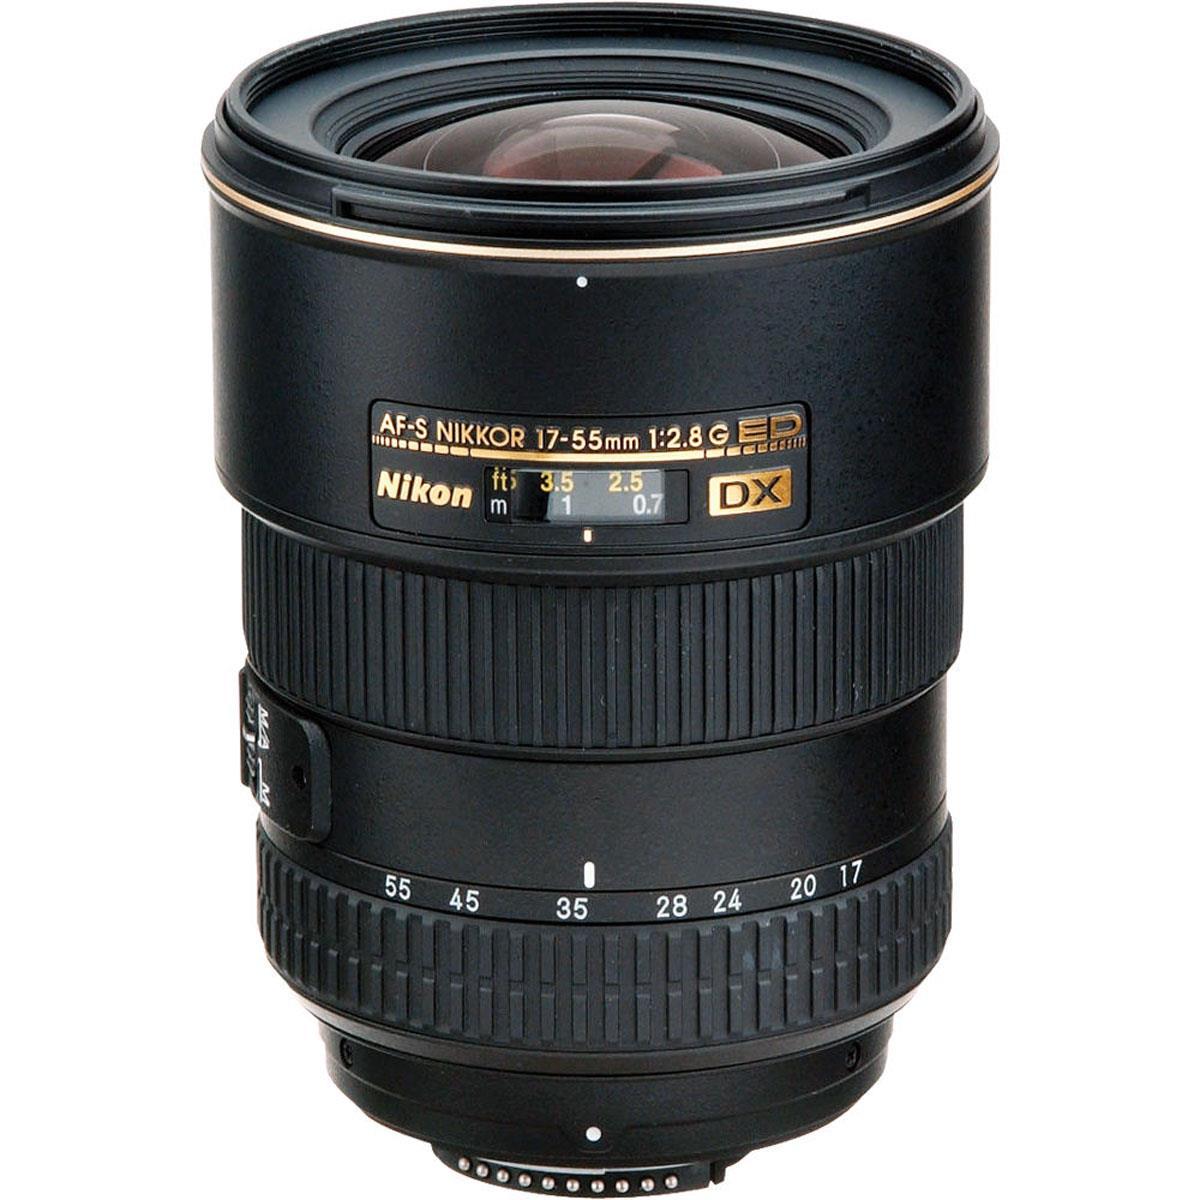 

Nikon 17-55mm f/2.8G ED-IF AF-S DX Zoom NIKKOR Lens - U.S.A. Warranty